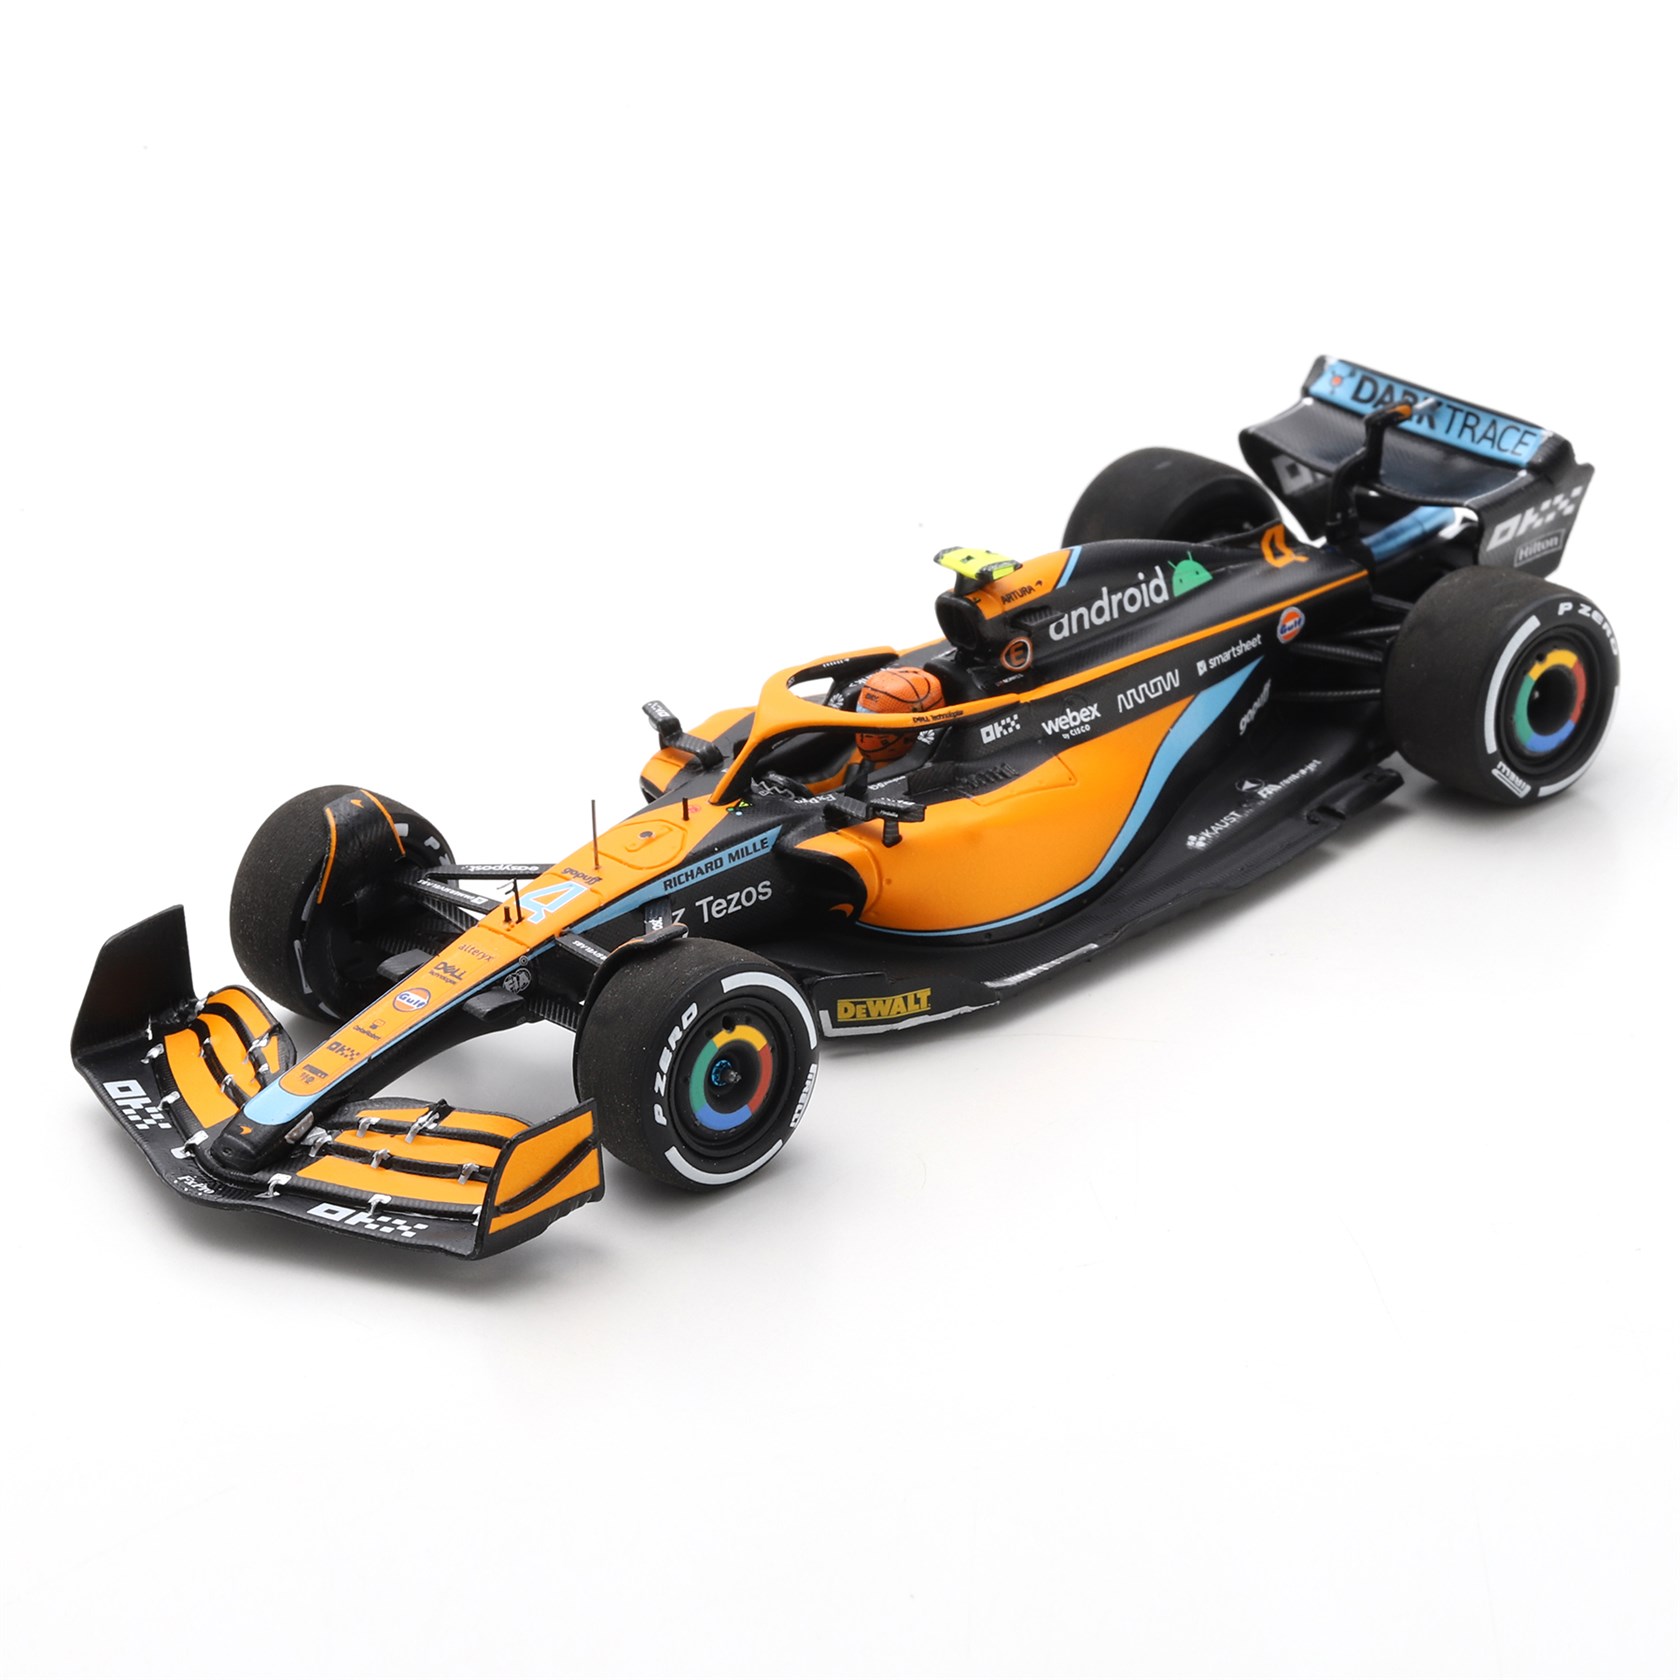 McLaren F1 diecast models